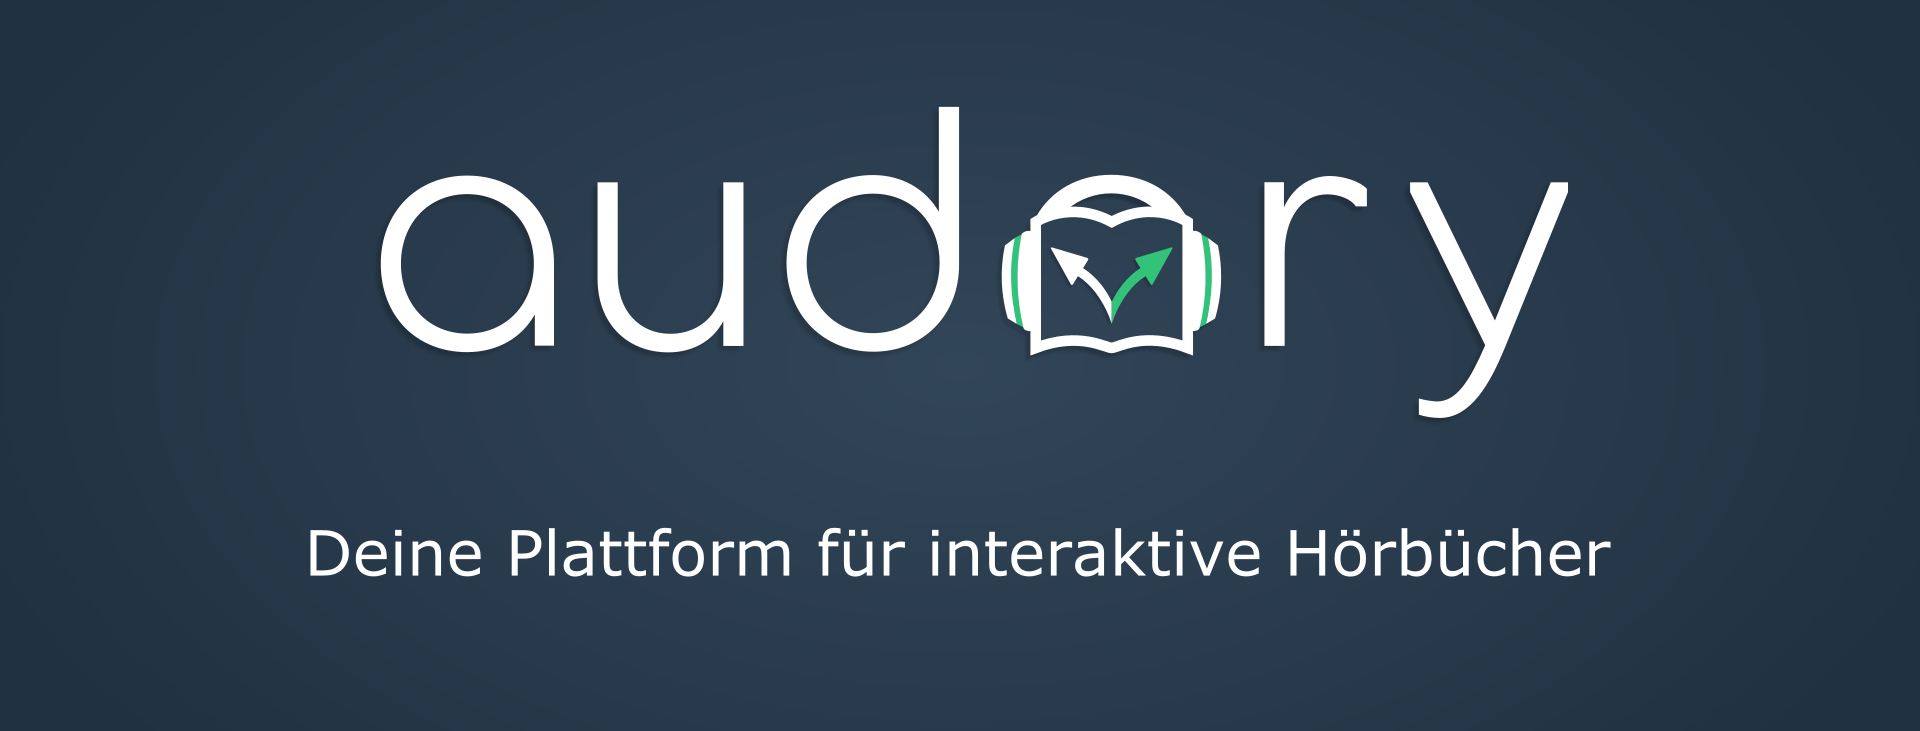 audory / startup von Chemnitz / Background